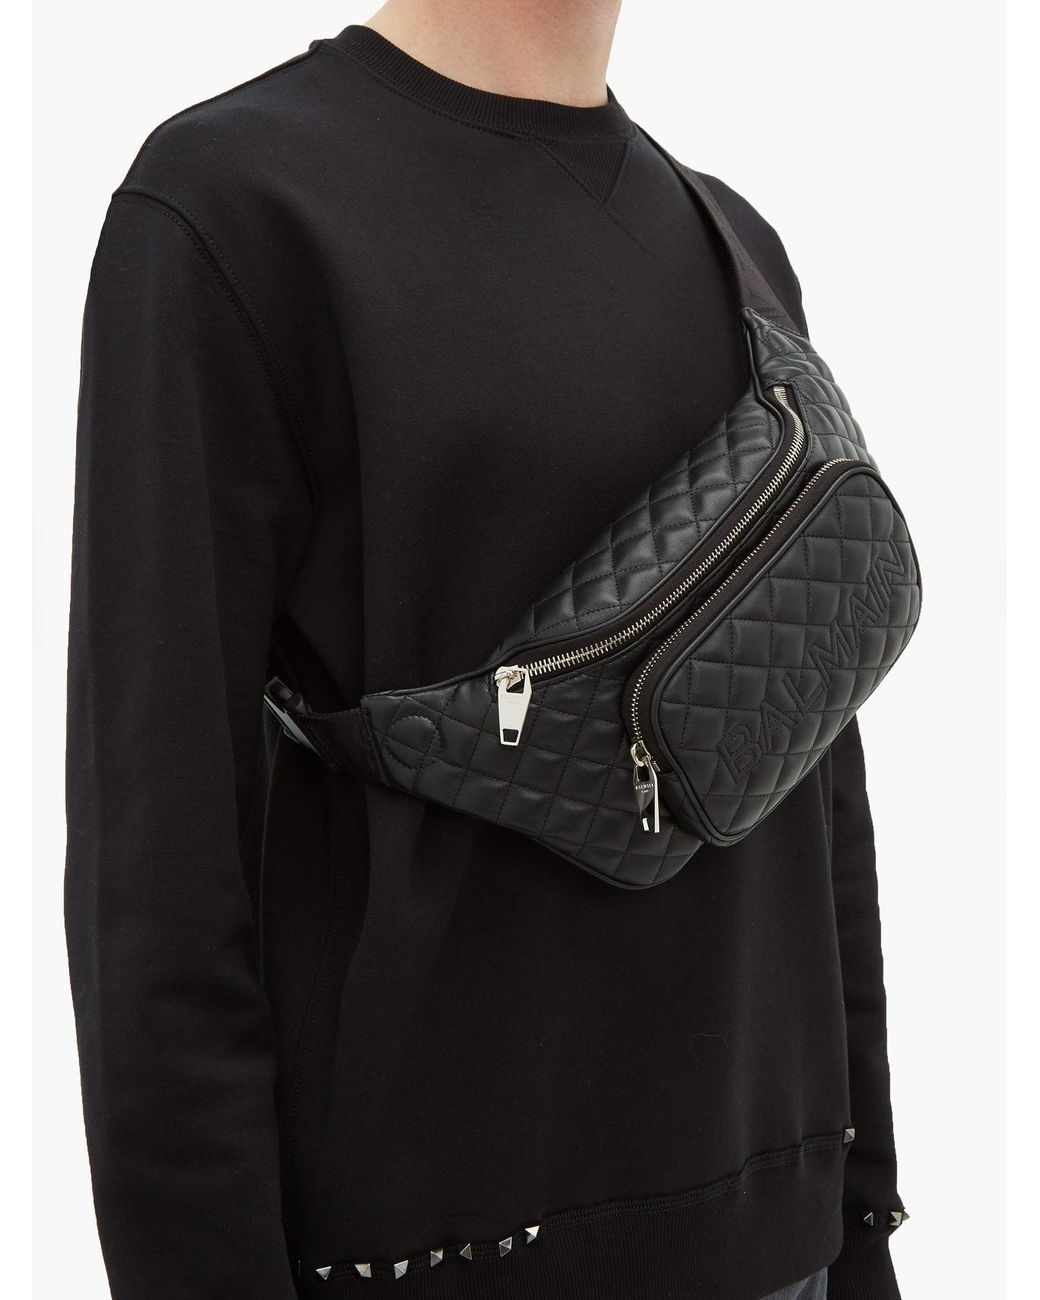 Baginning Black Leather Quilted Belt Bag Crossbody Waist Bag